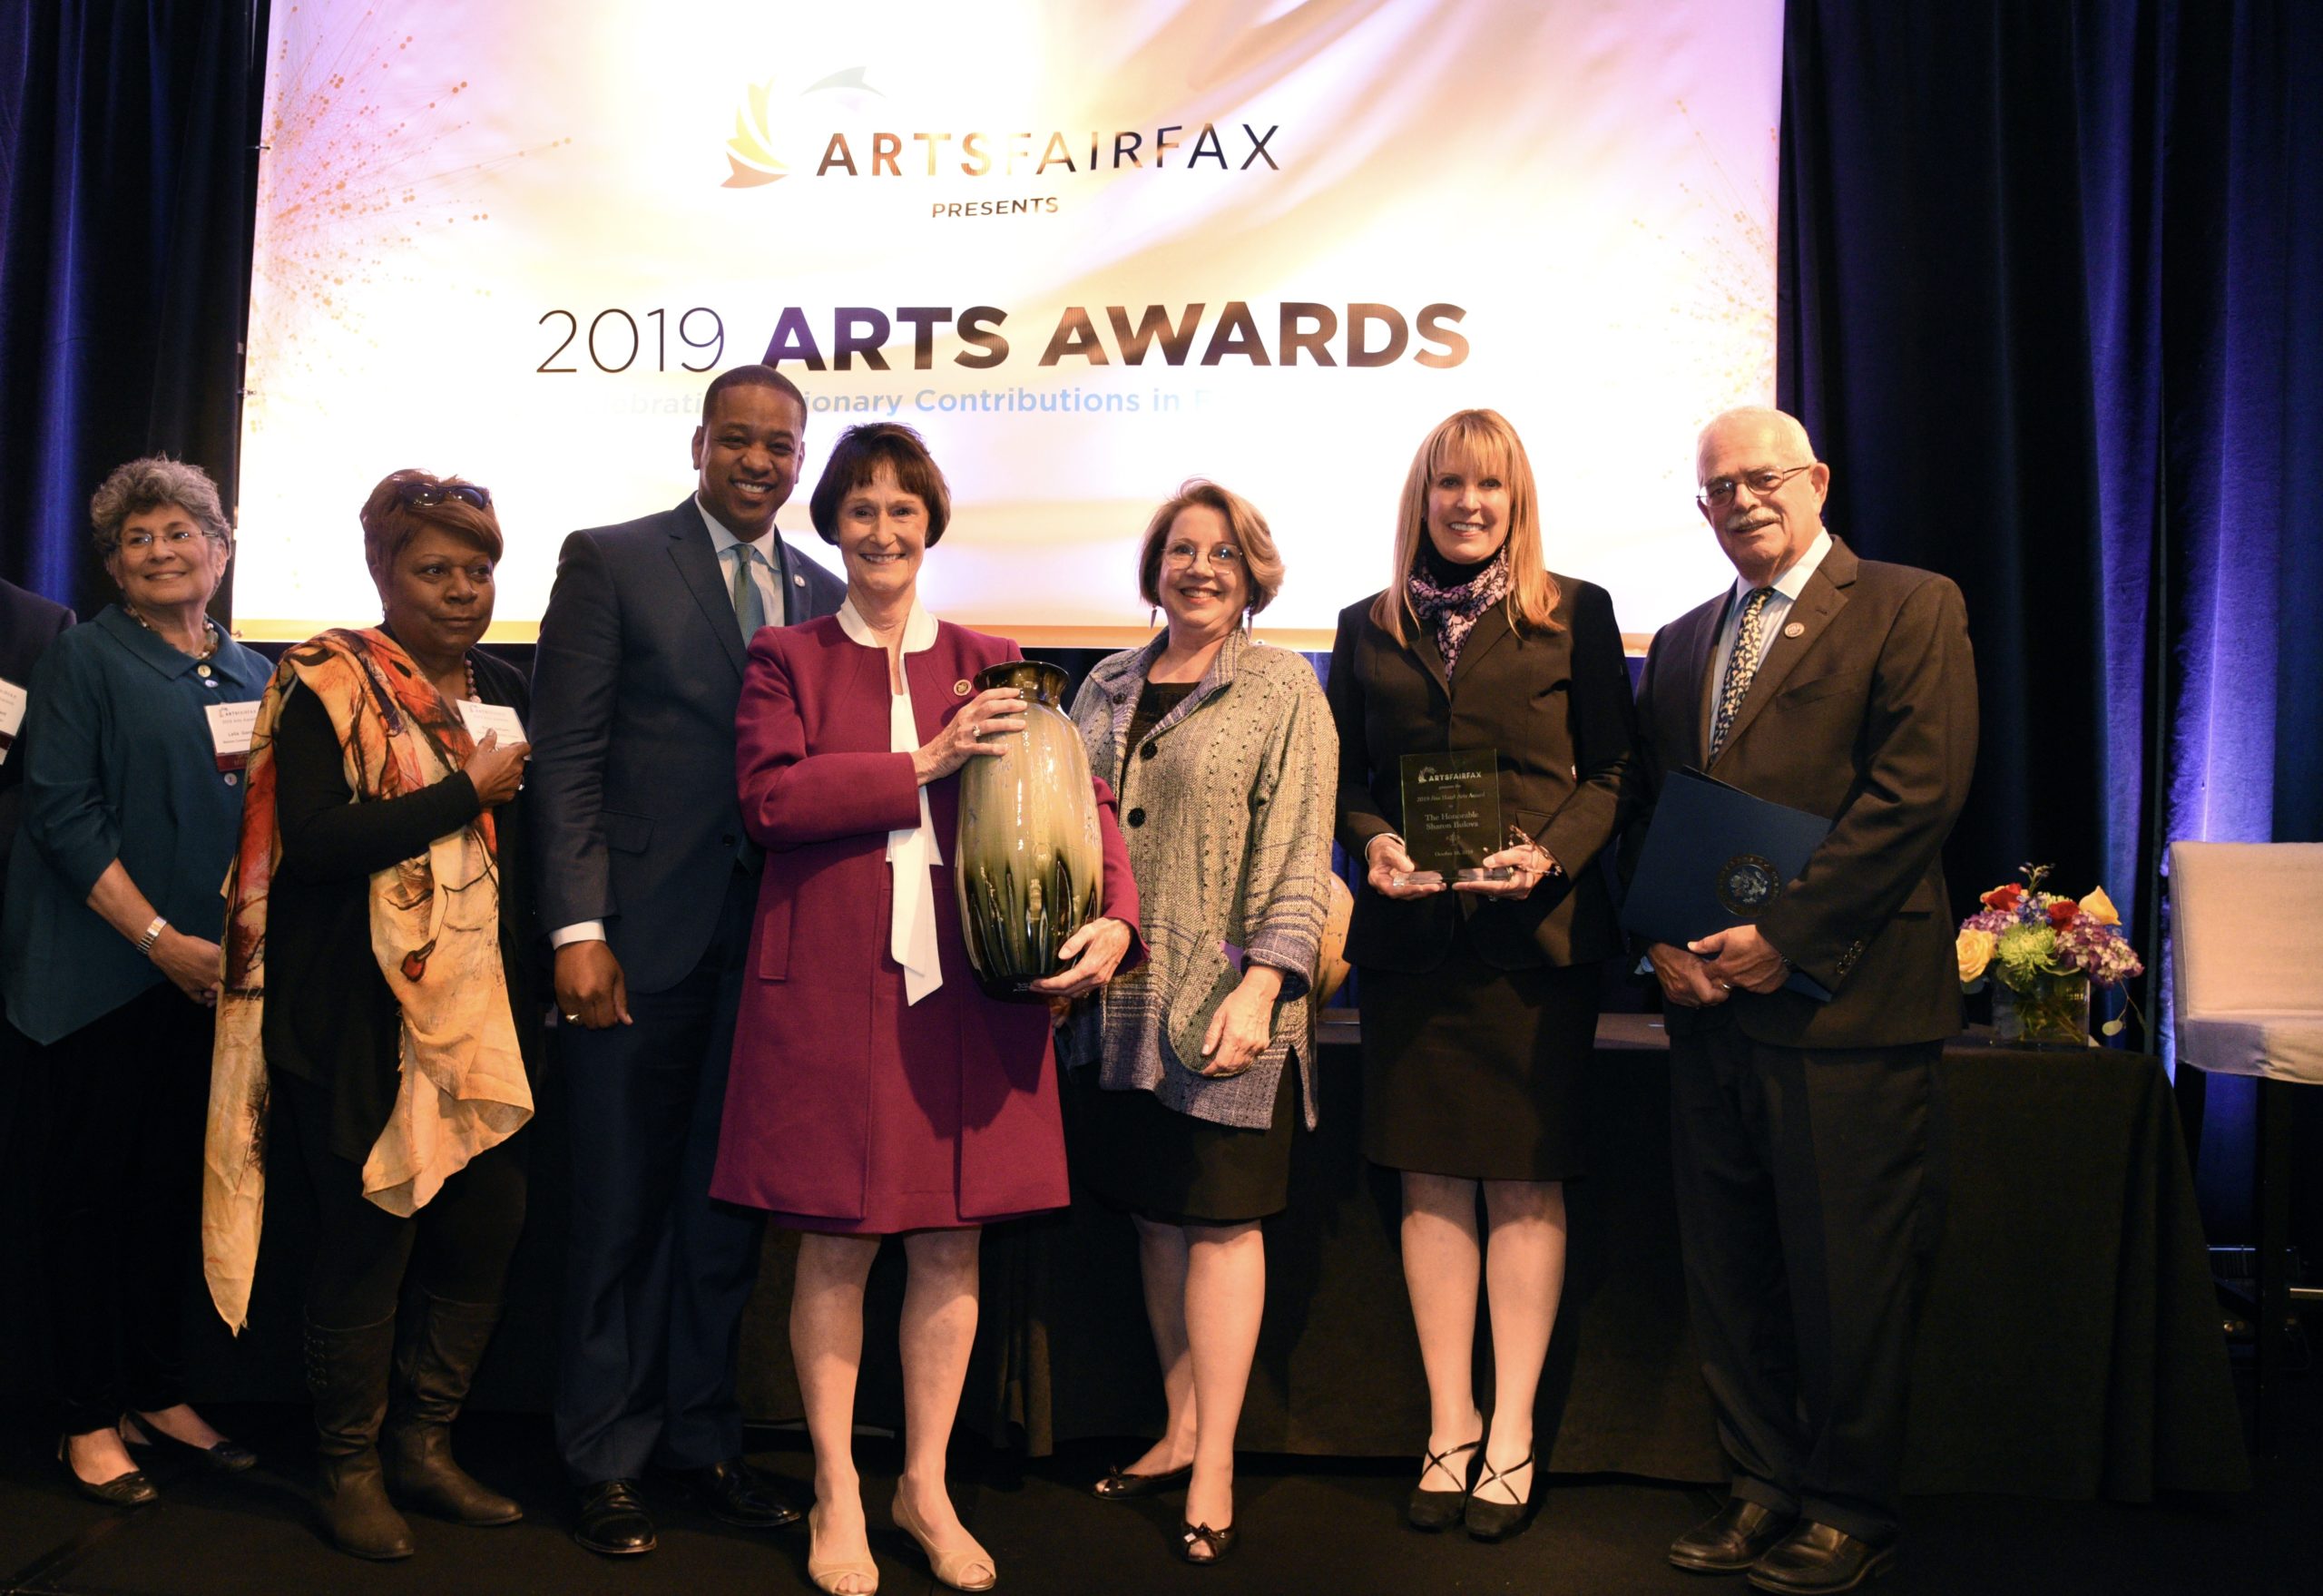 ARTSFAIRFAX Awards $379,129 in Grants to 37 Local Fairfax County Arts Organizations